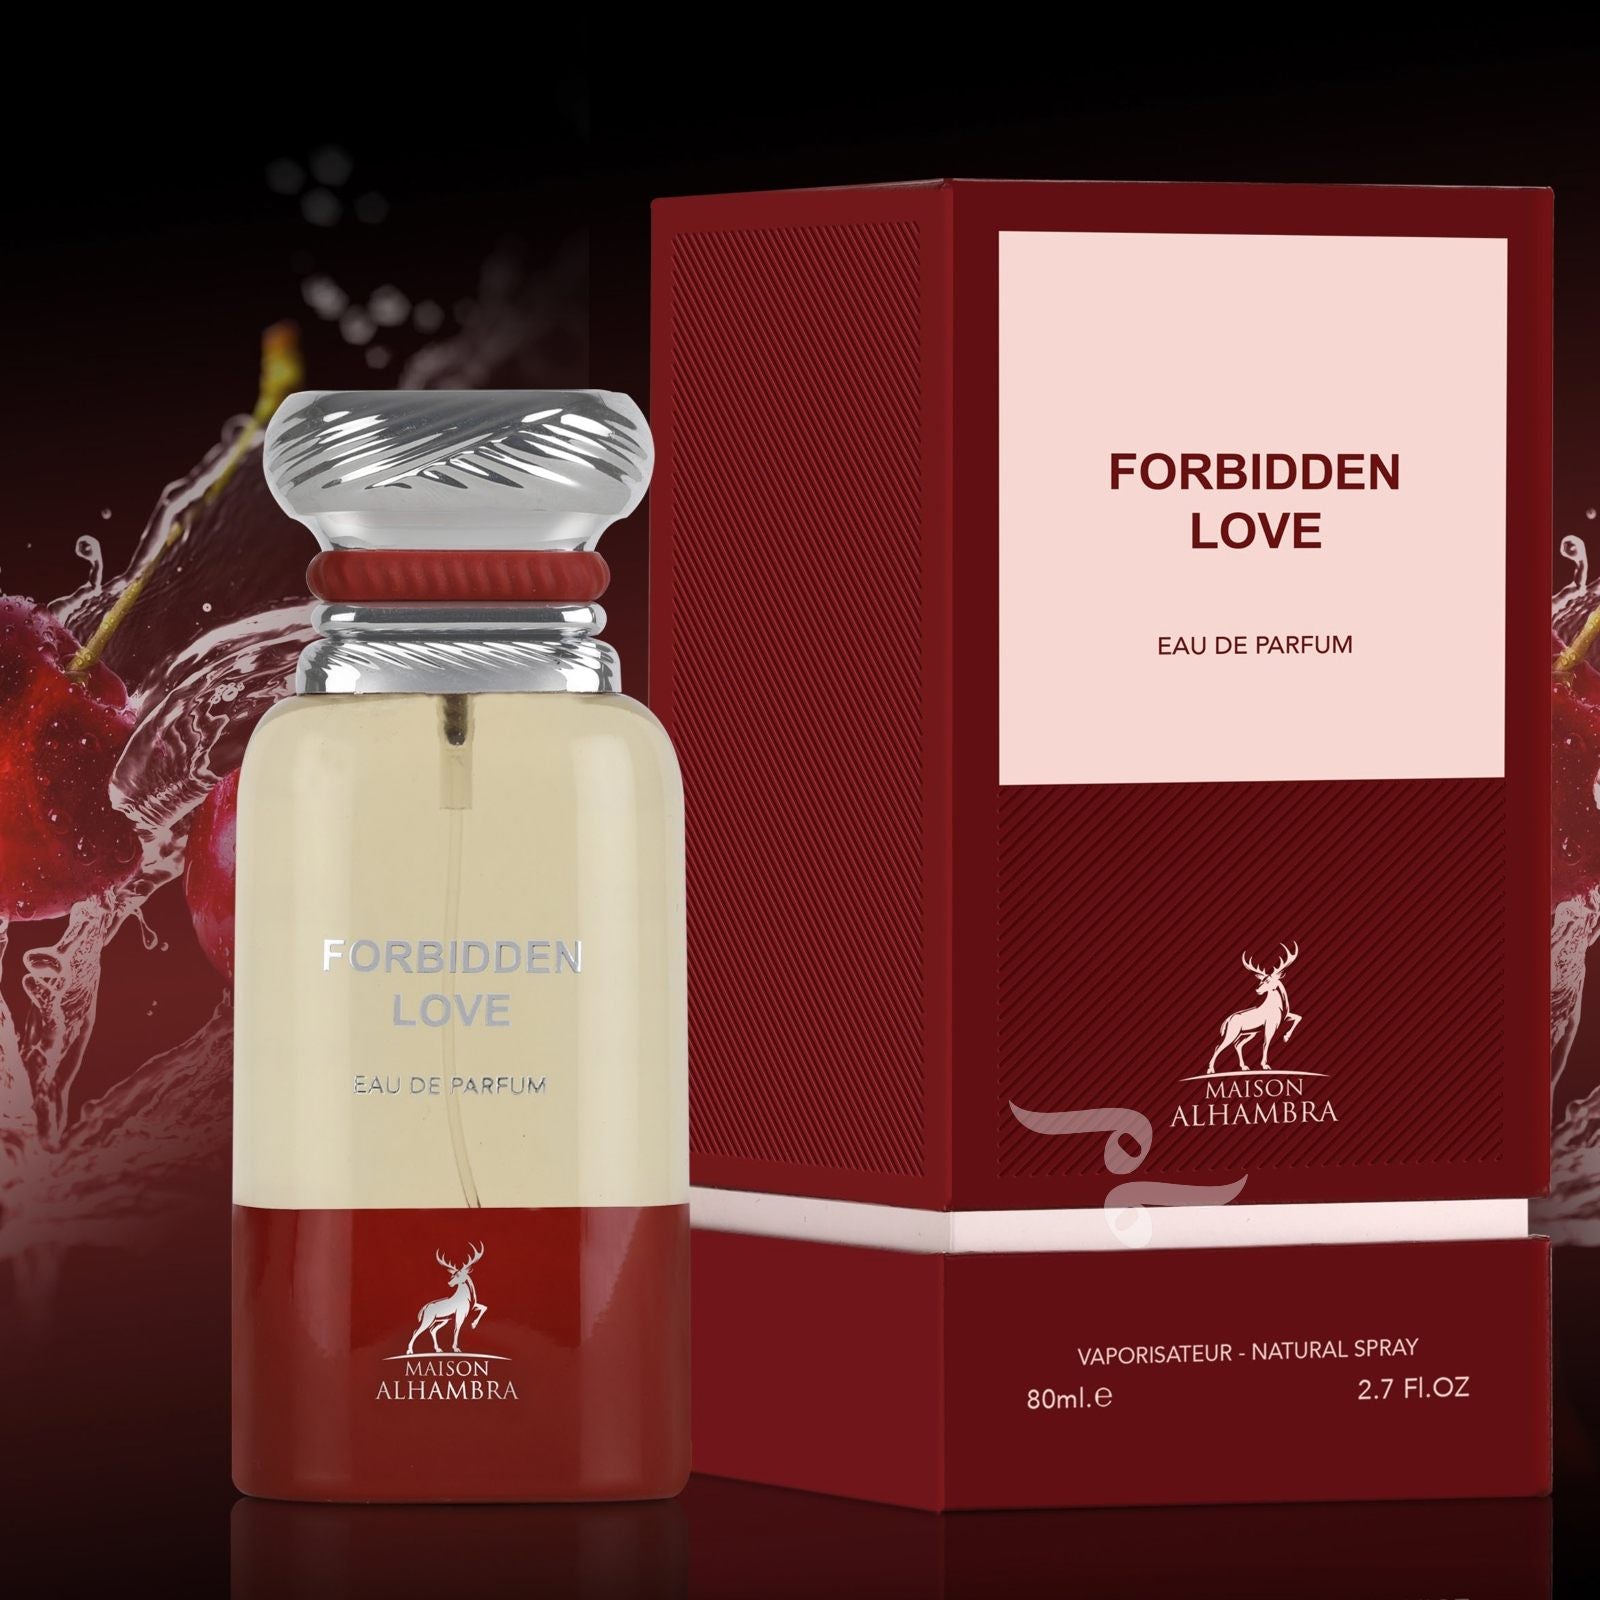 Forbidden Love (formerly Lovely Cherie) By Maison Al Hambra